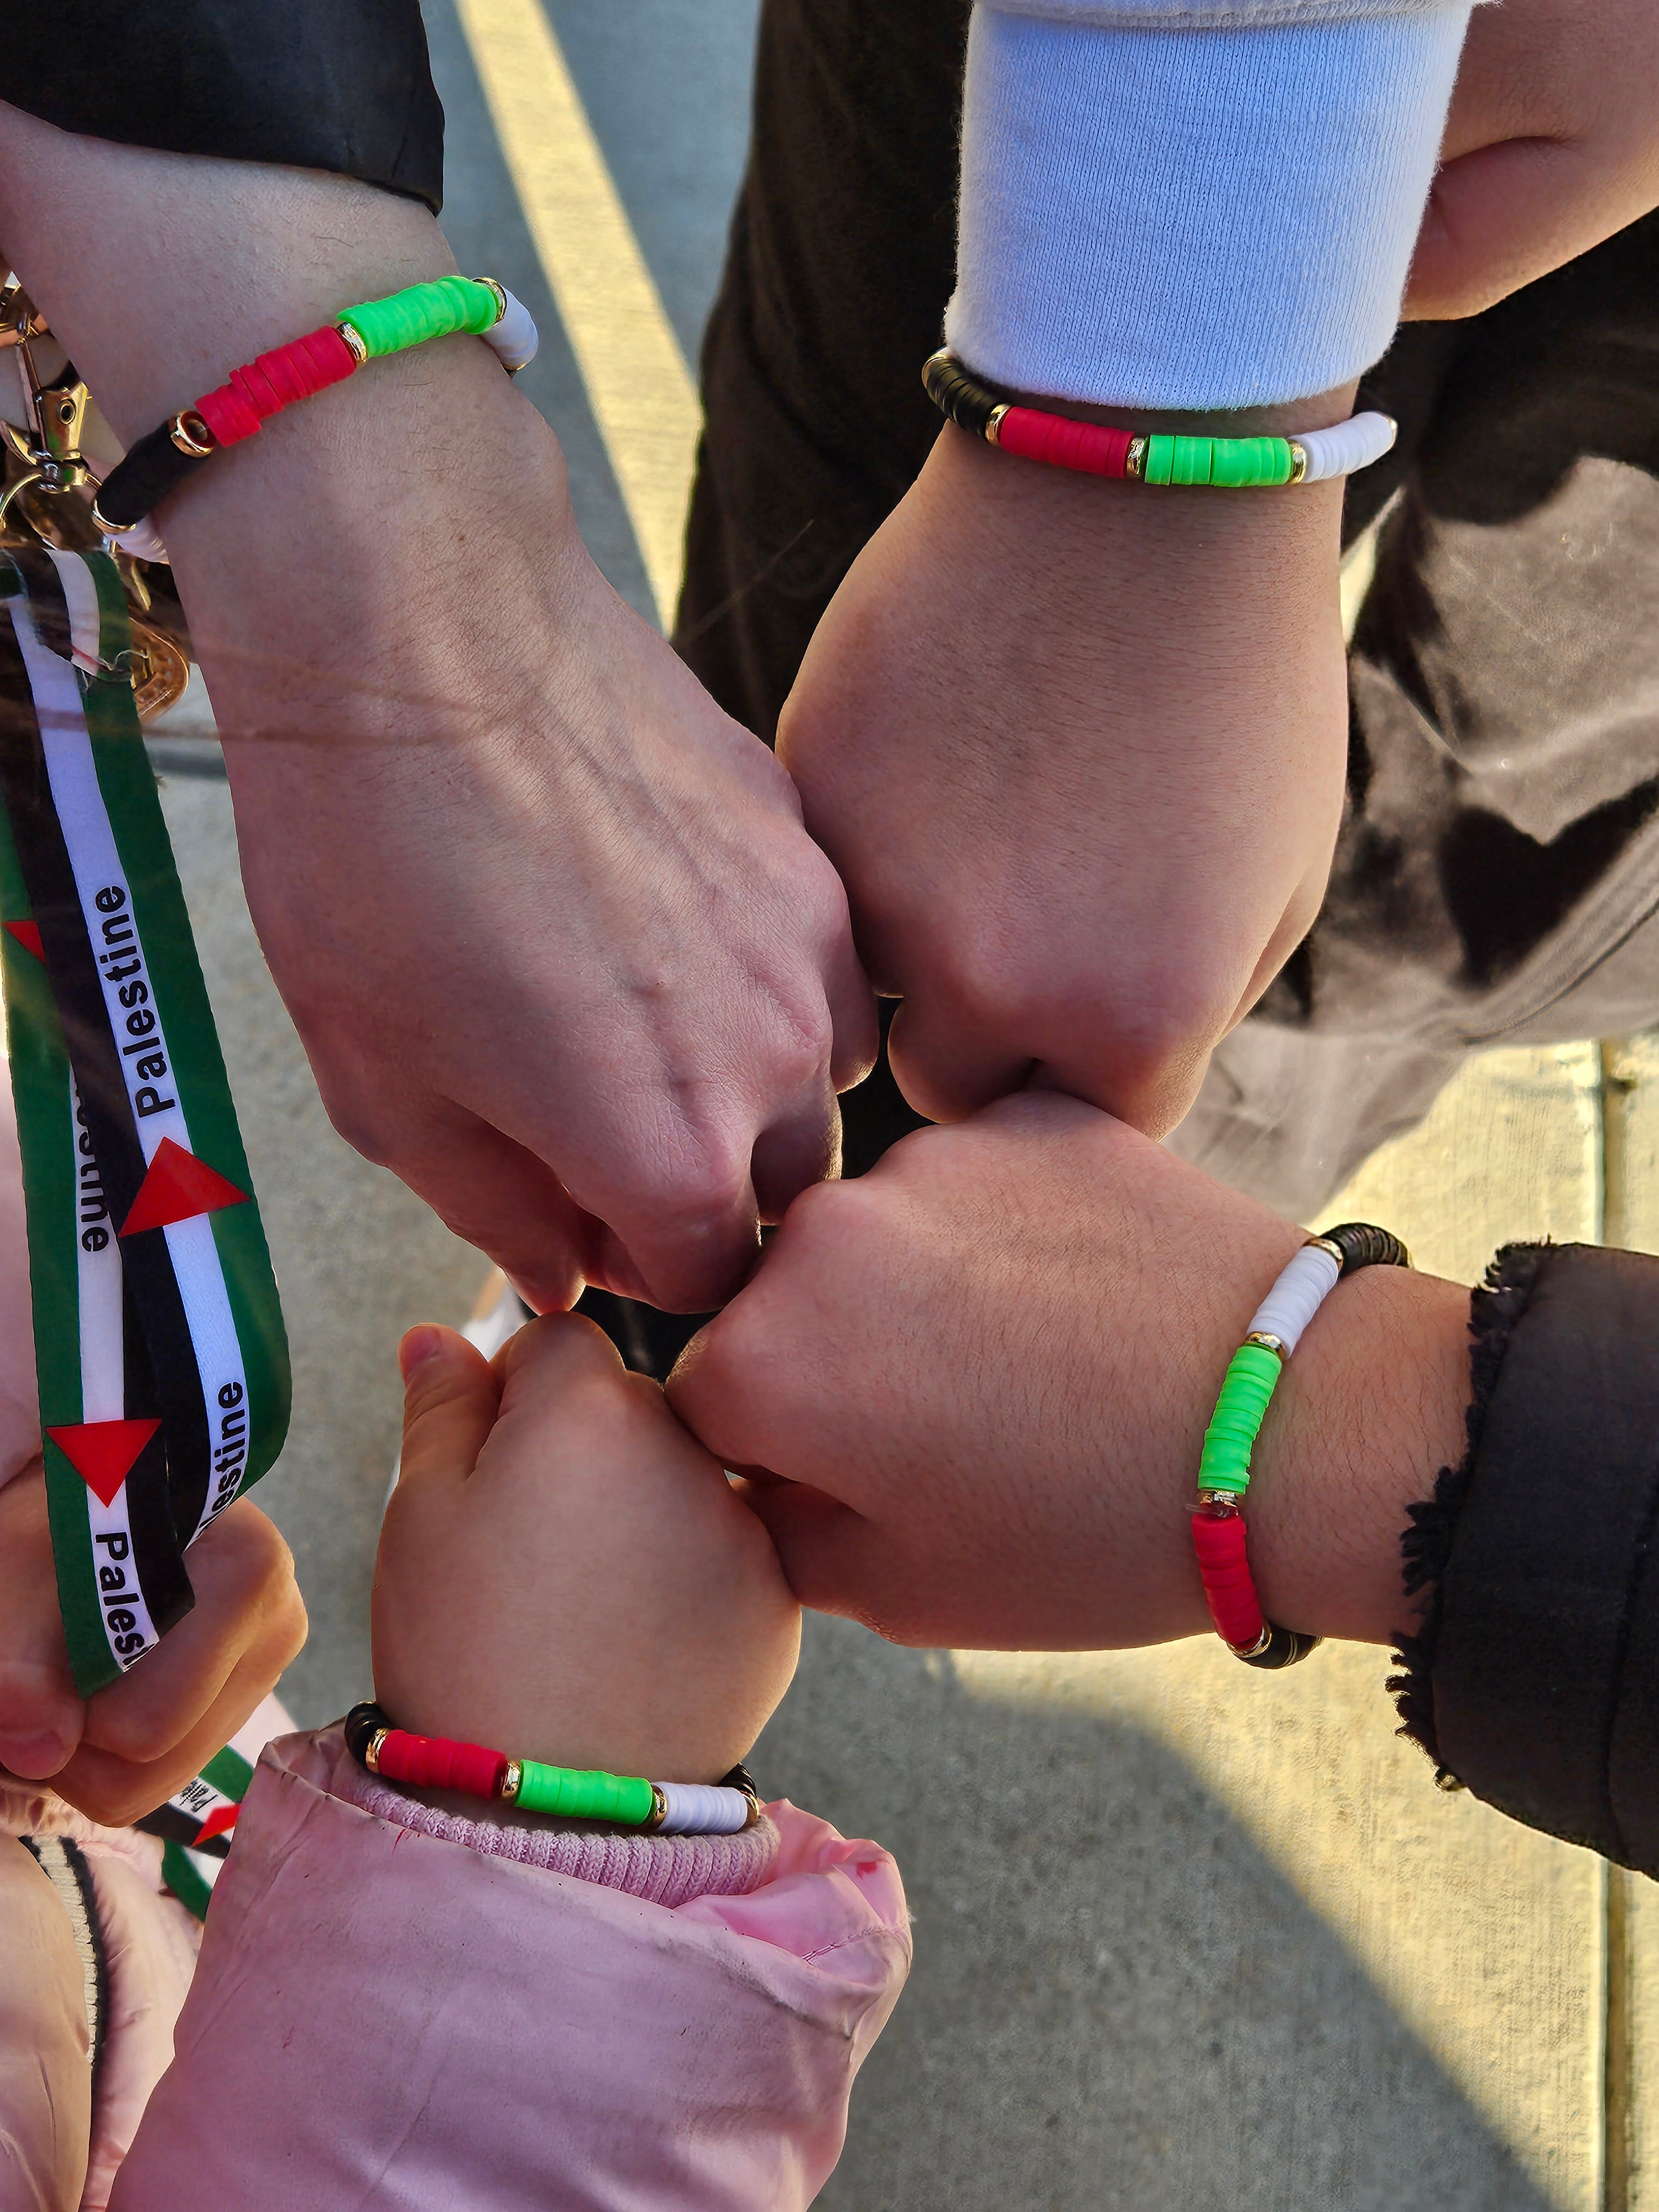 Palestine Colors Clay Bead Bracelets - Habibi Heritage